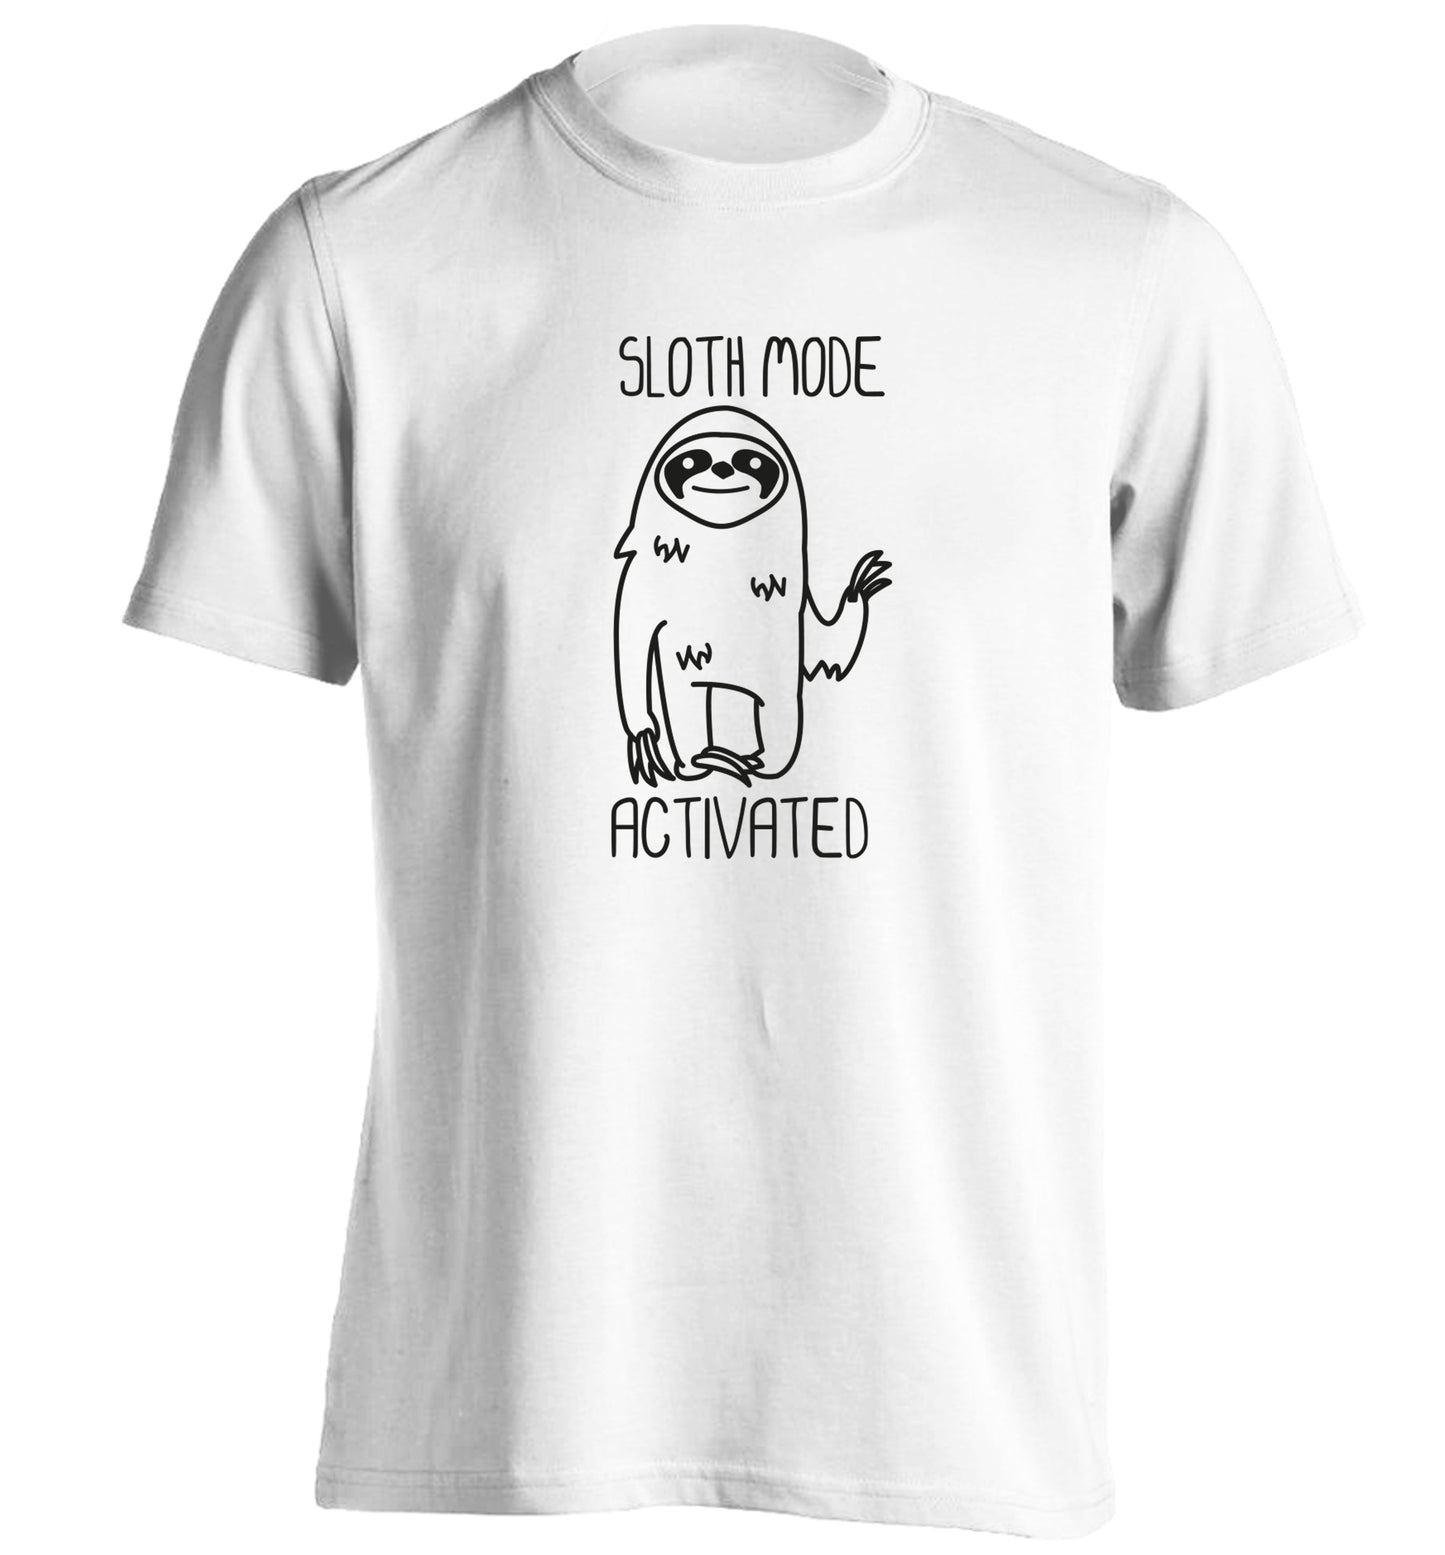 Sloth mode acitvated adults unisex white Tshirt 2XL